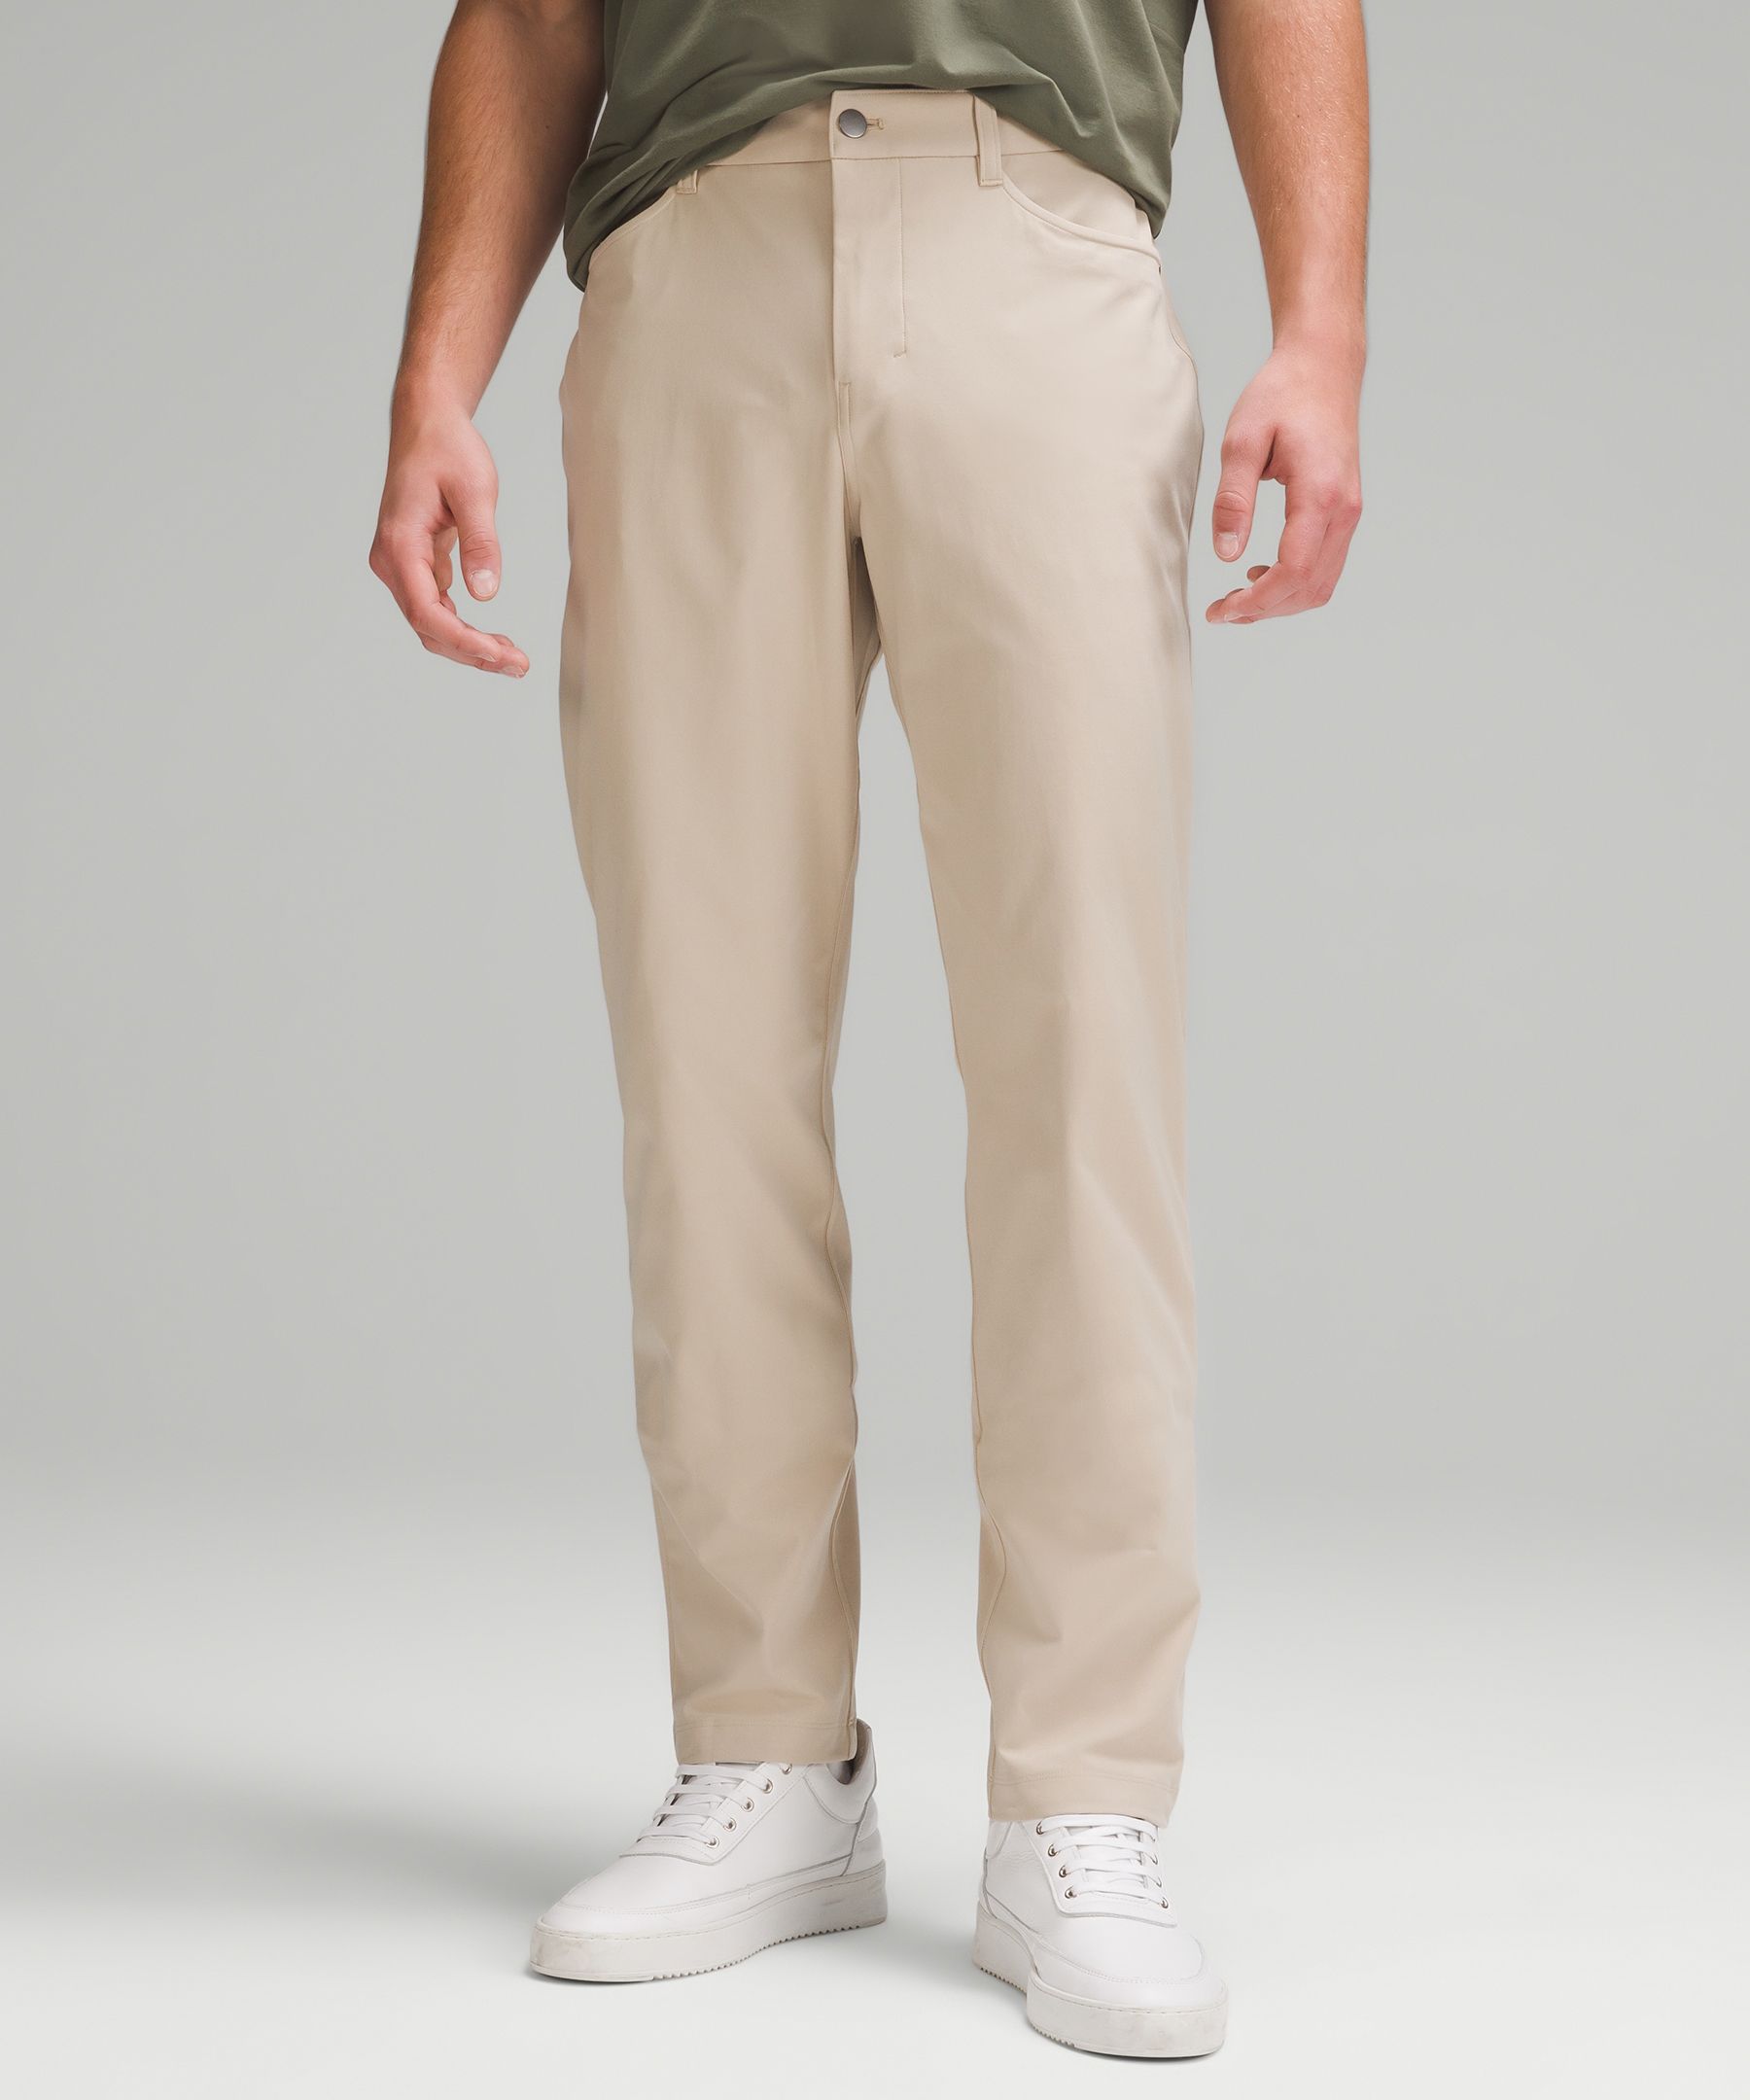 pants similar to lululemon abc pants